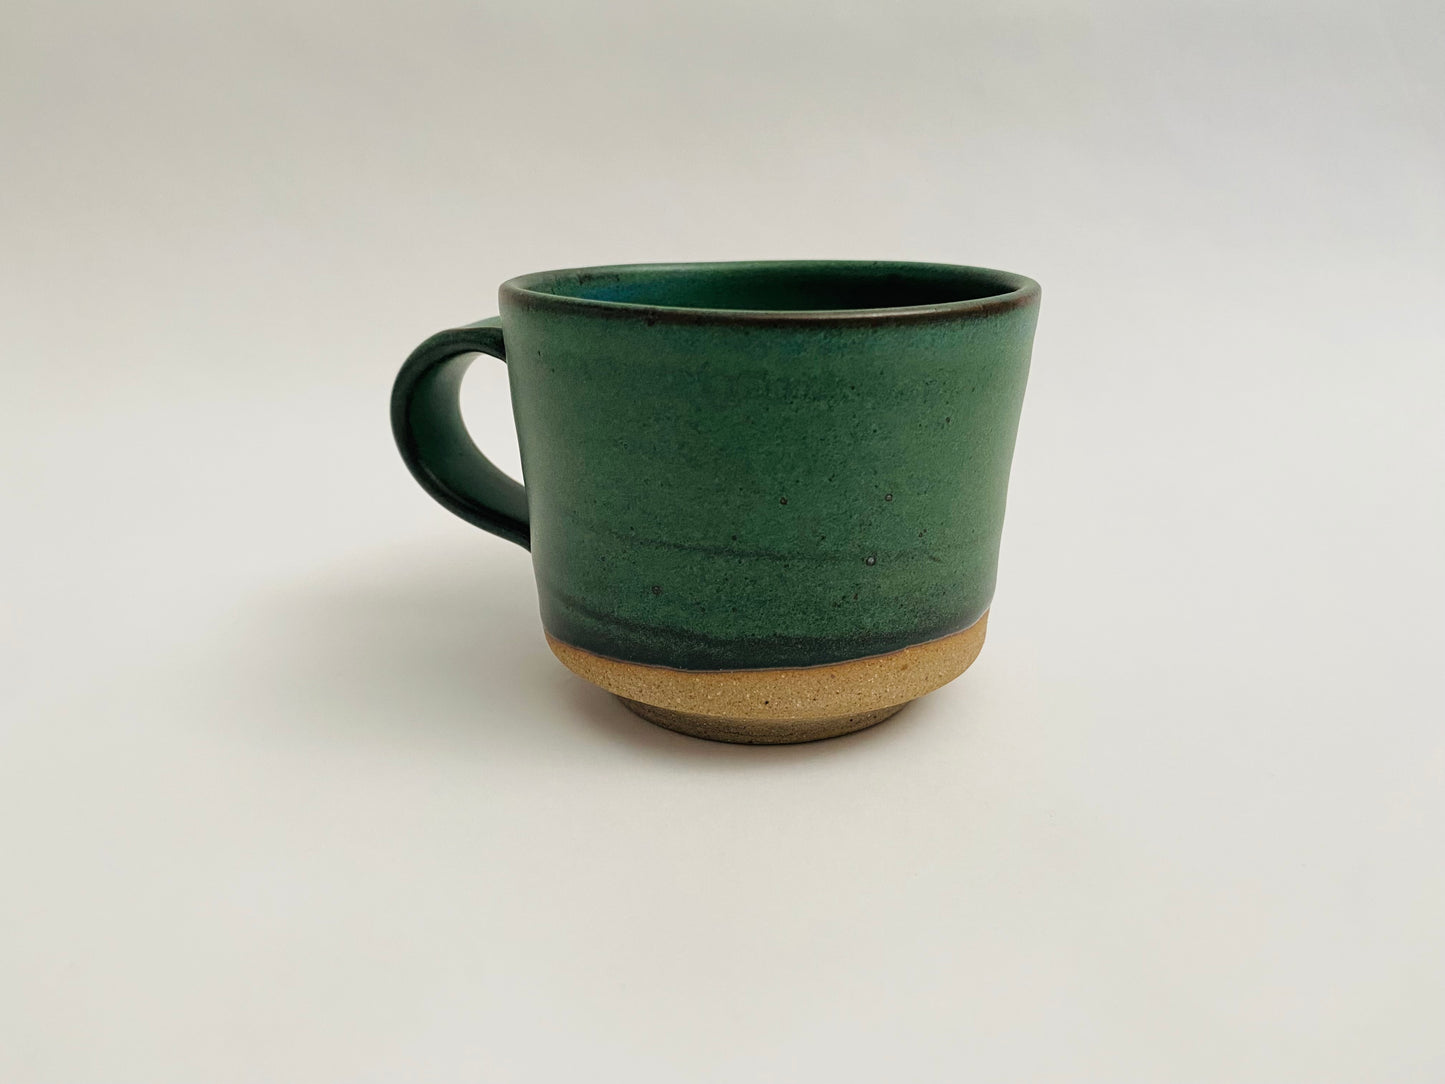 Forest green stoneware mug